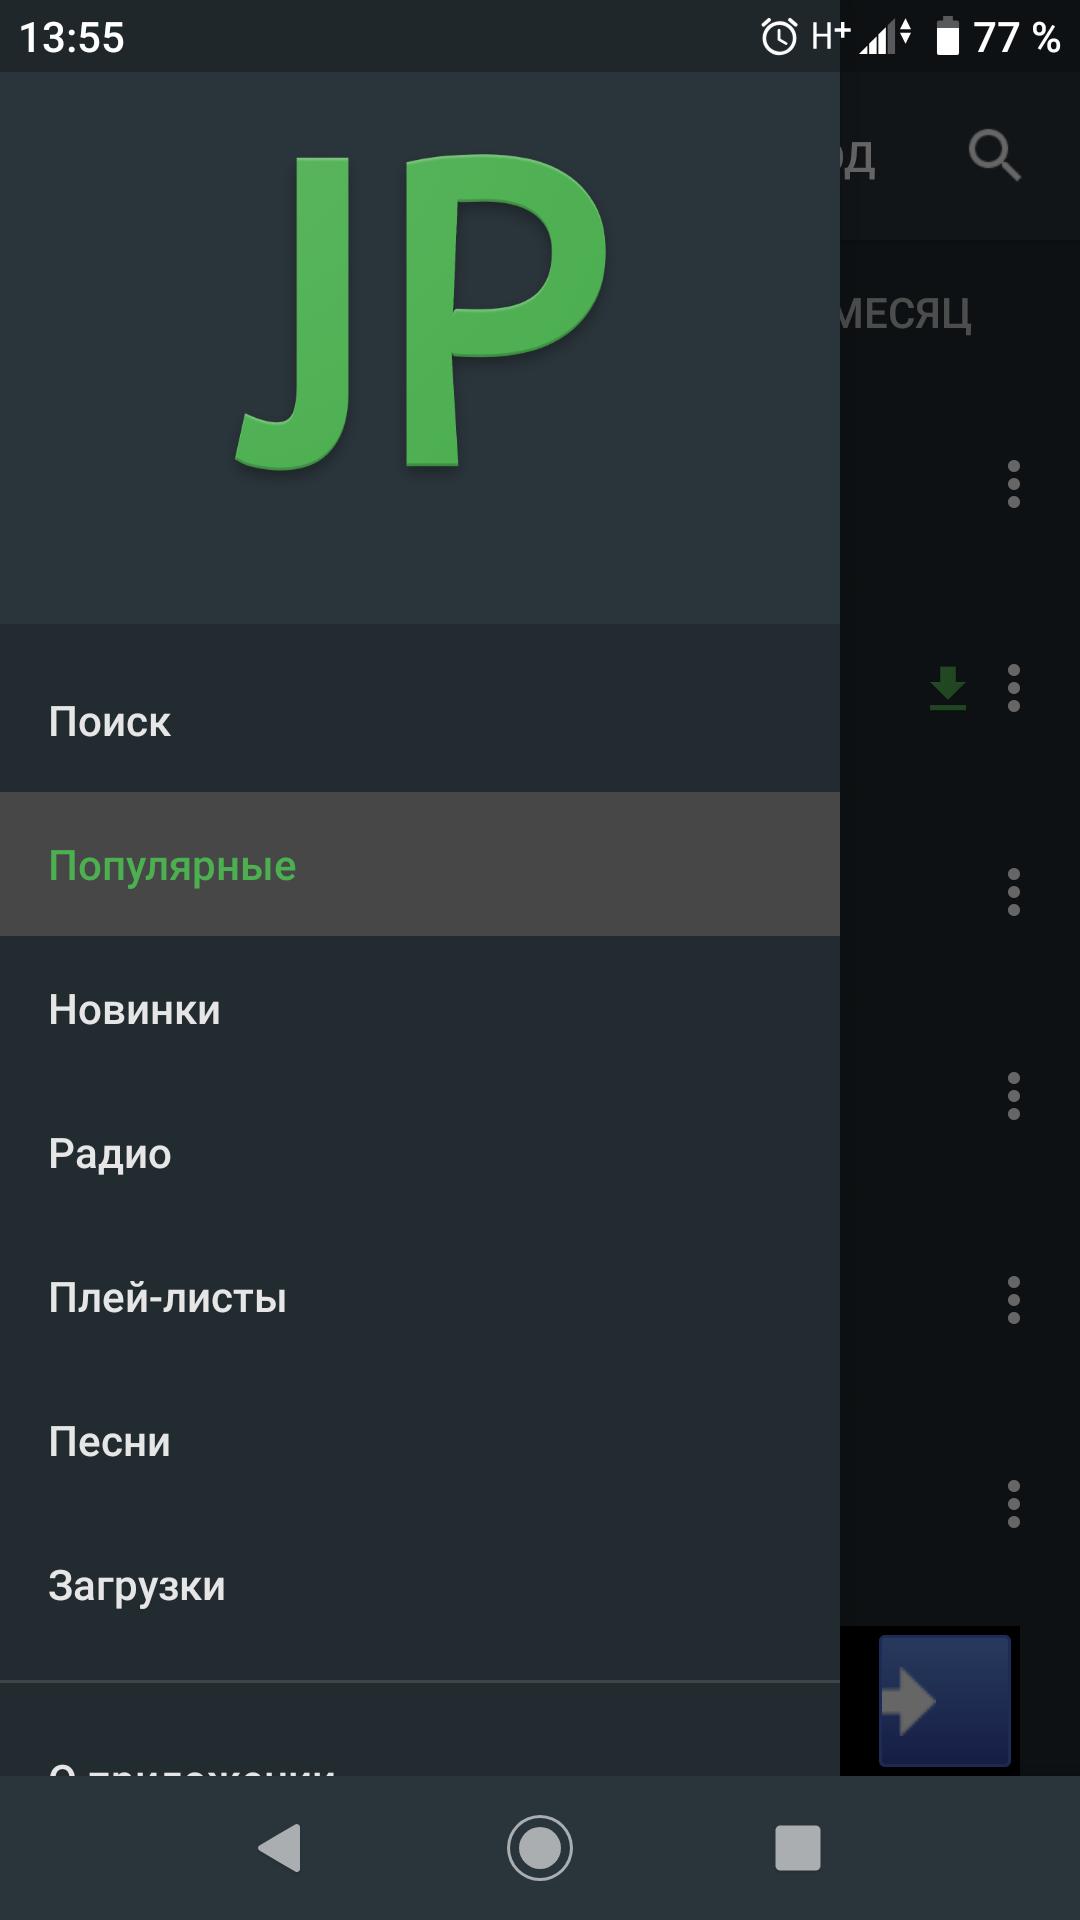 J Player - скачать музыку бесплатно MP3 APK for Android Download